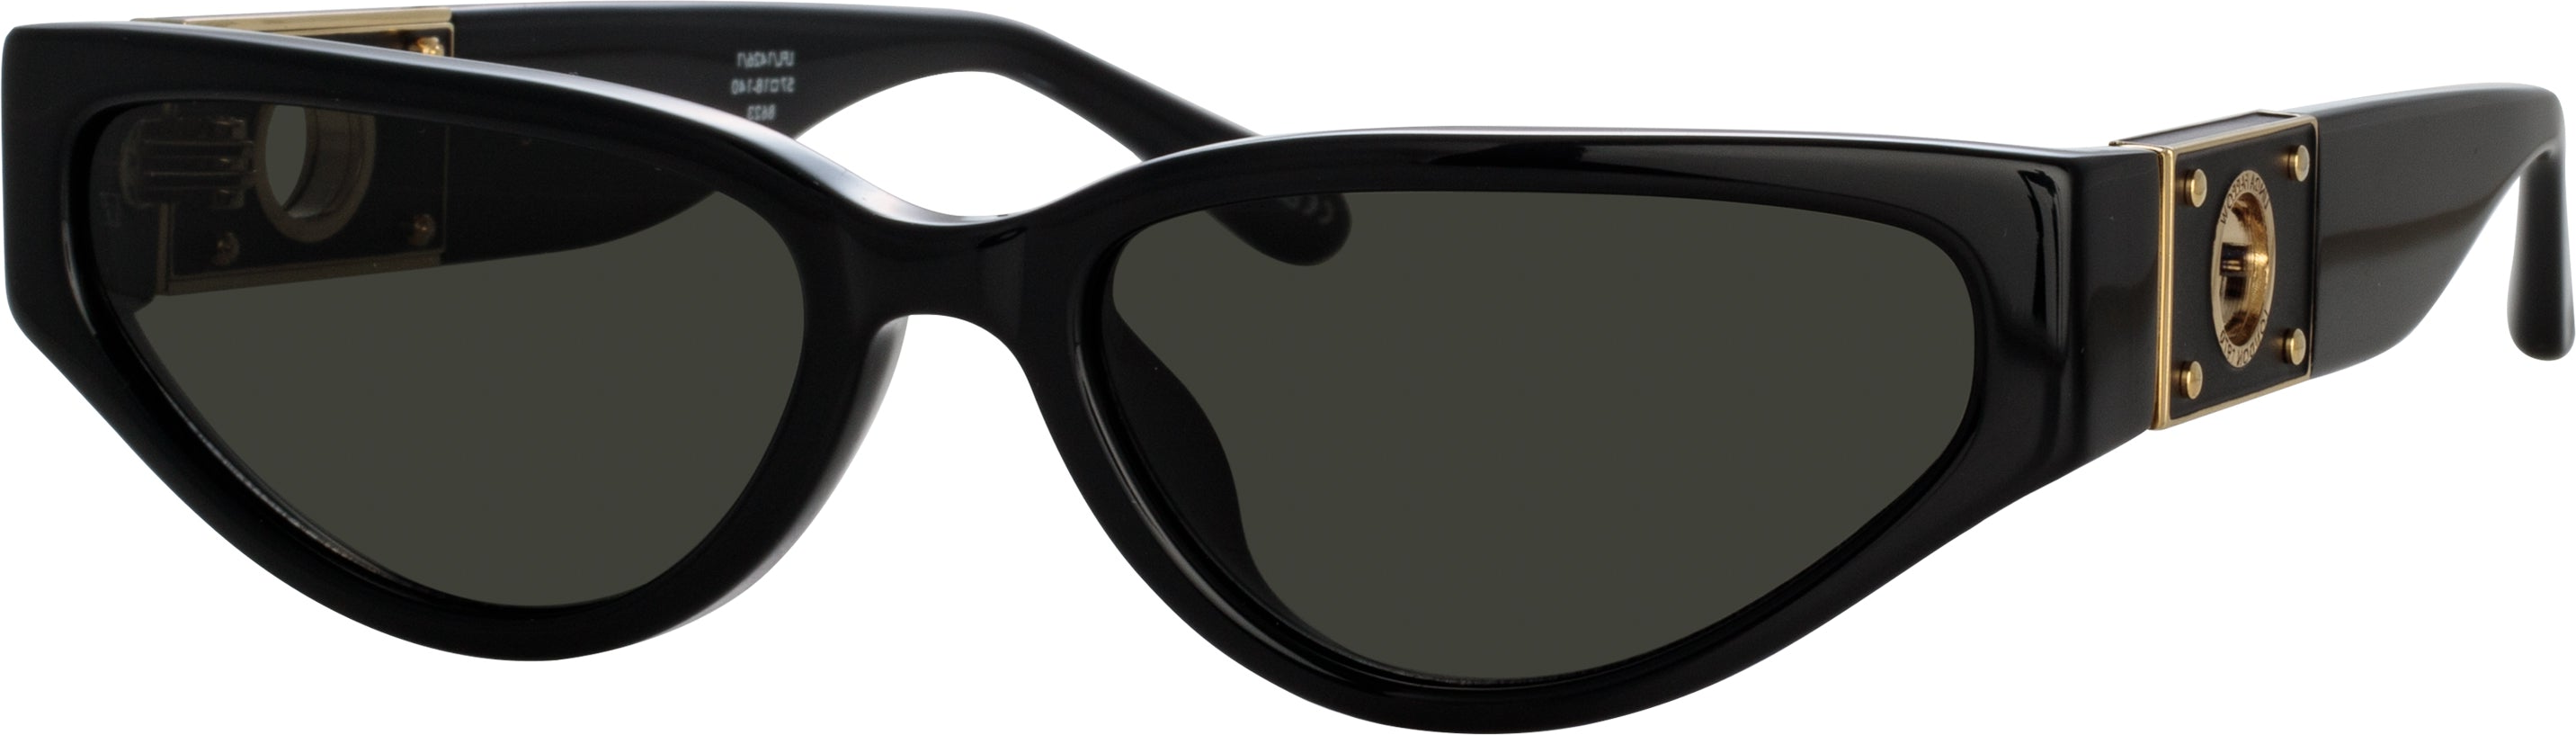 Color_LFL1426C1SUN - Tomie Cat Eye Sunglasses in Black